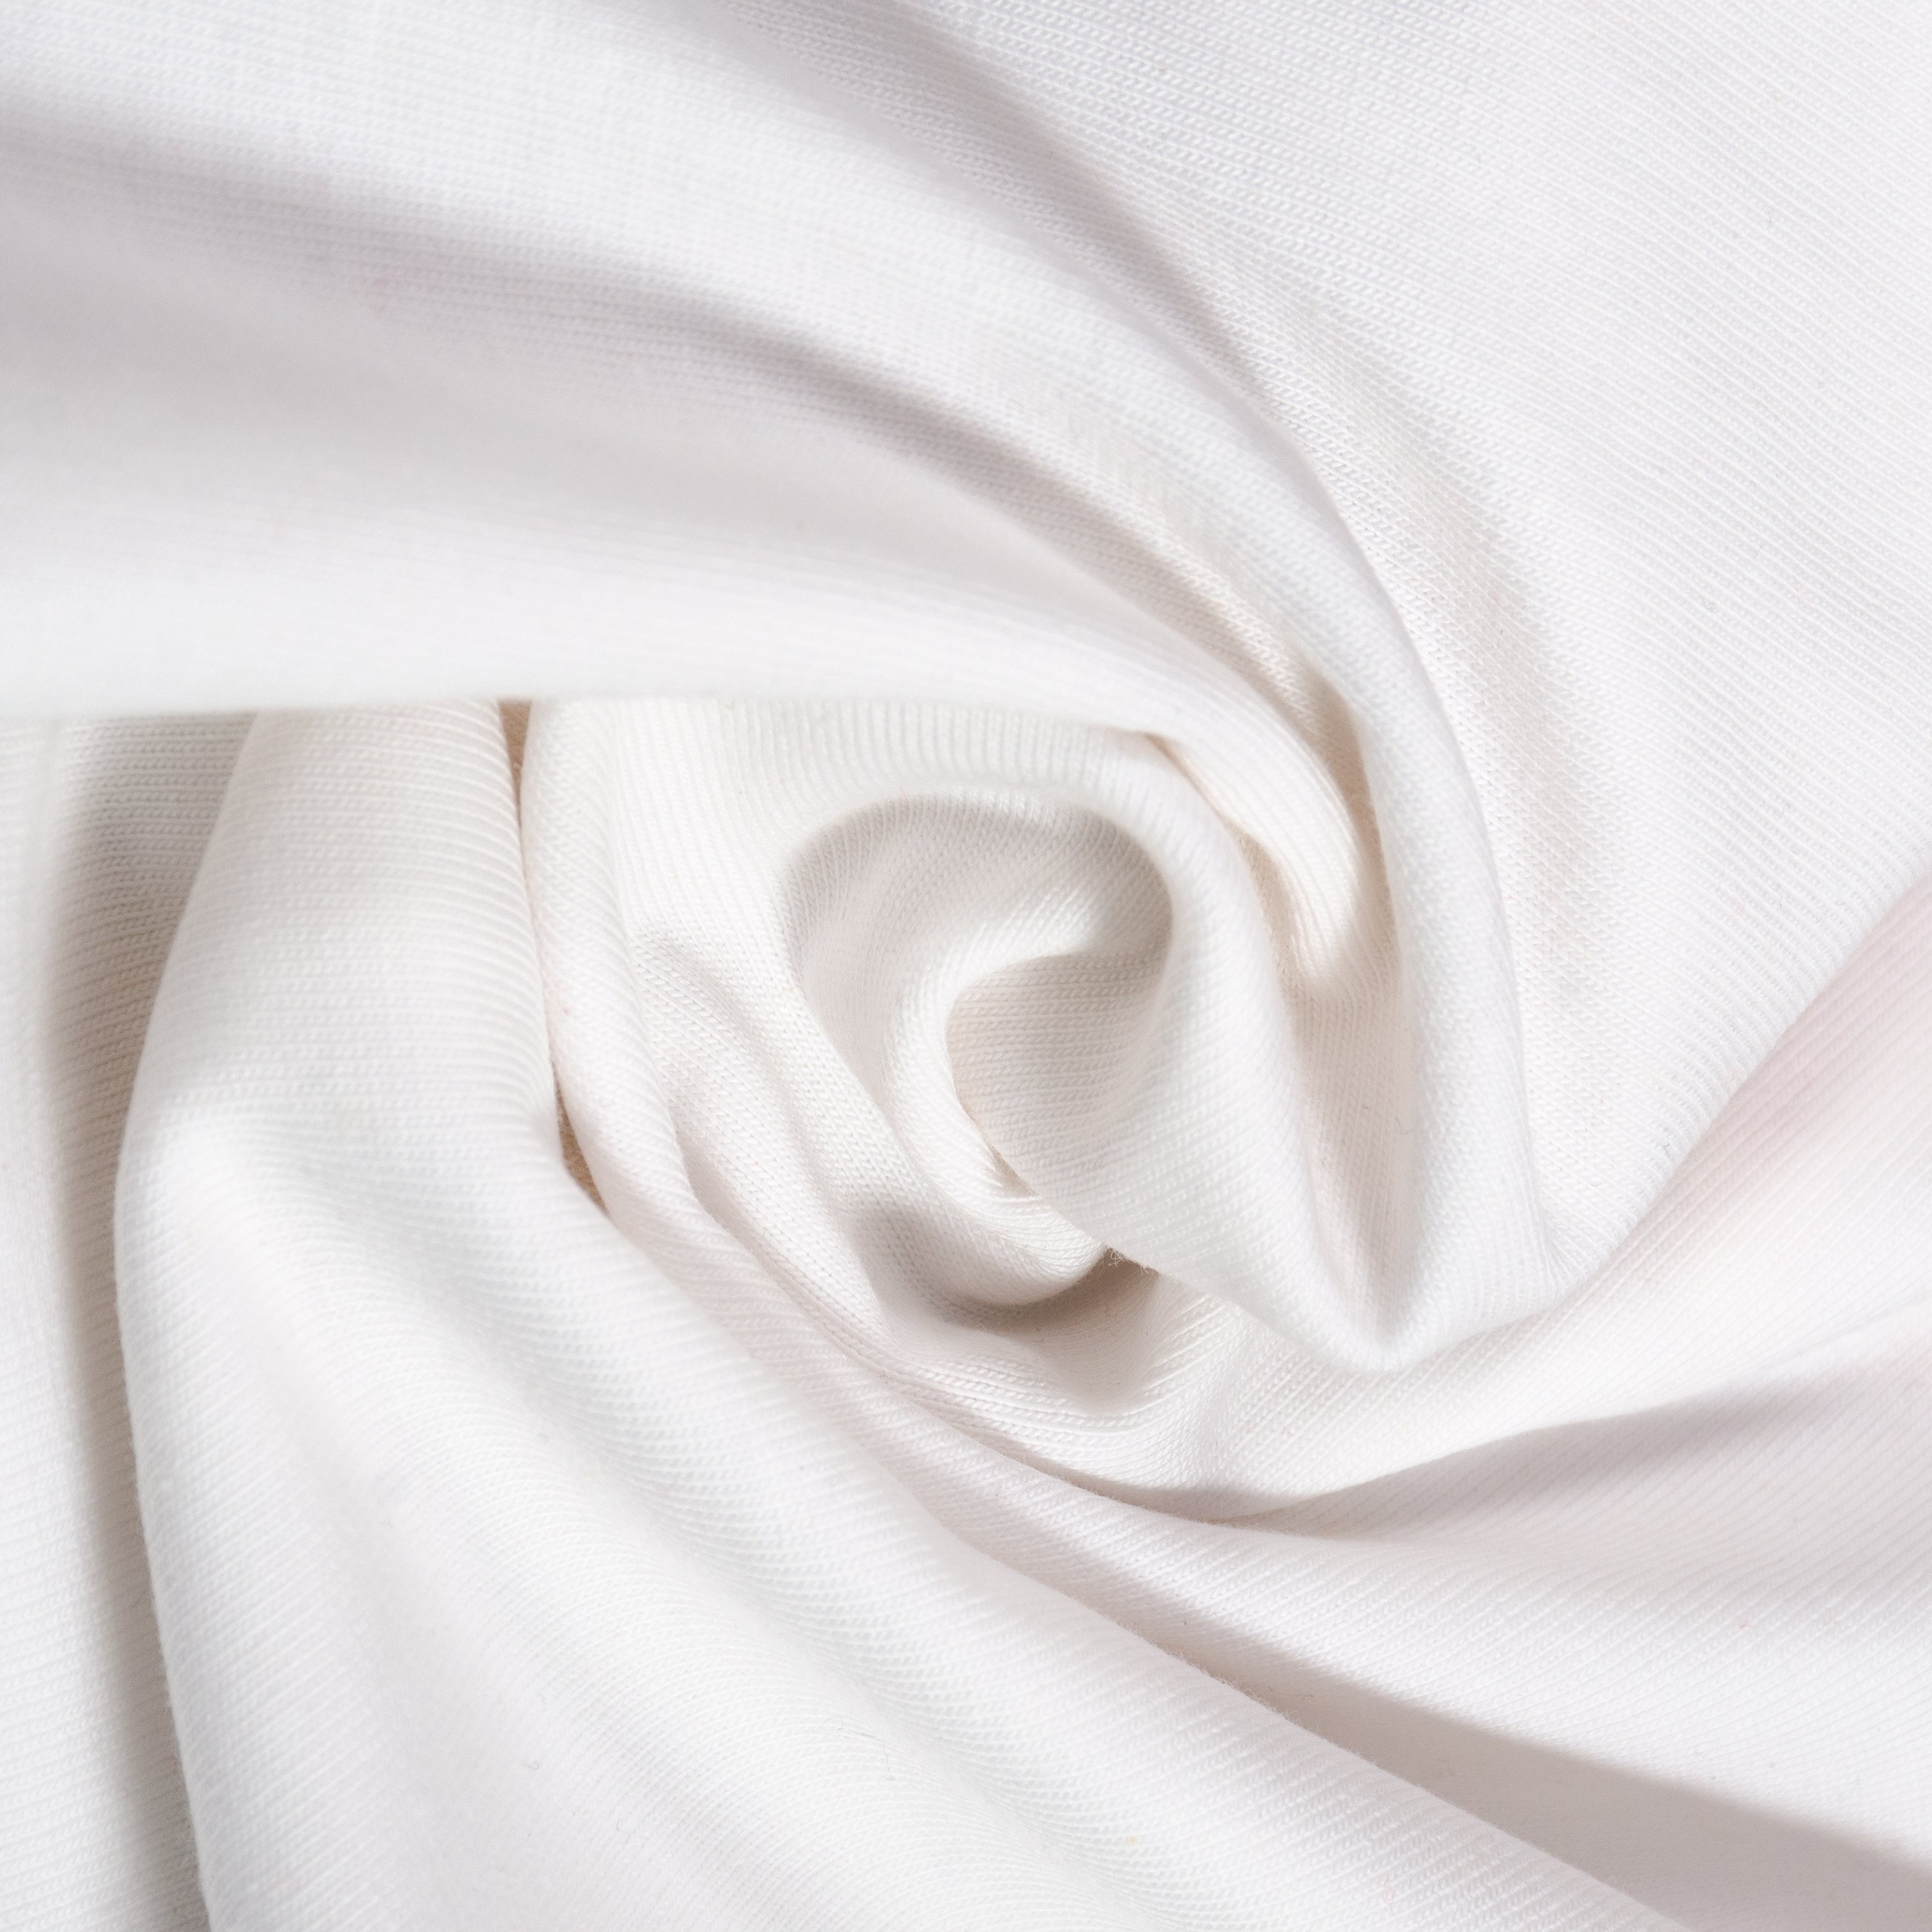 White-Tshirt-Fabric-Closeup-Banner